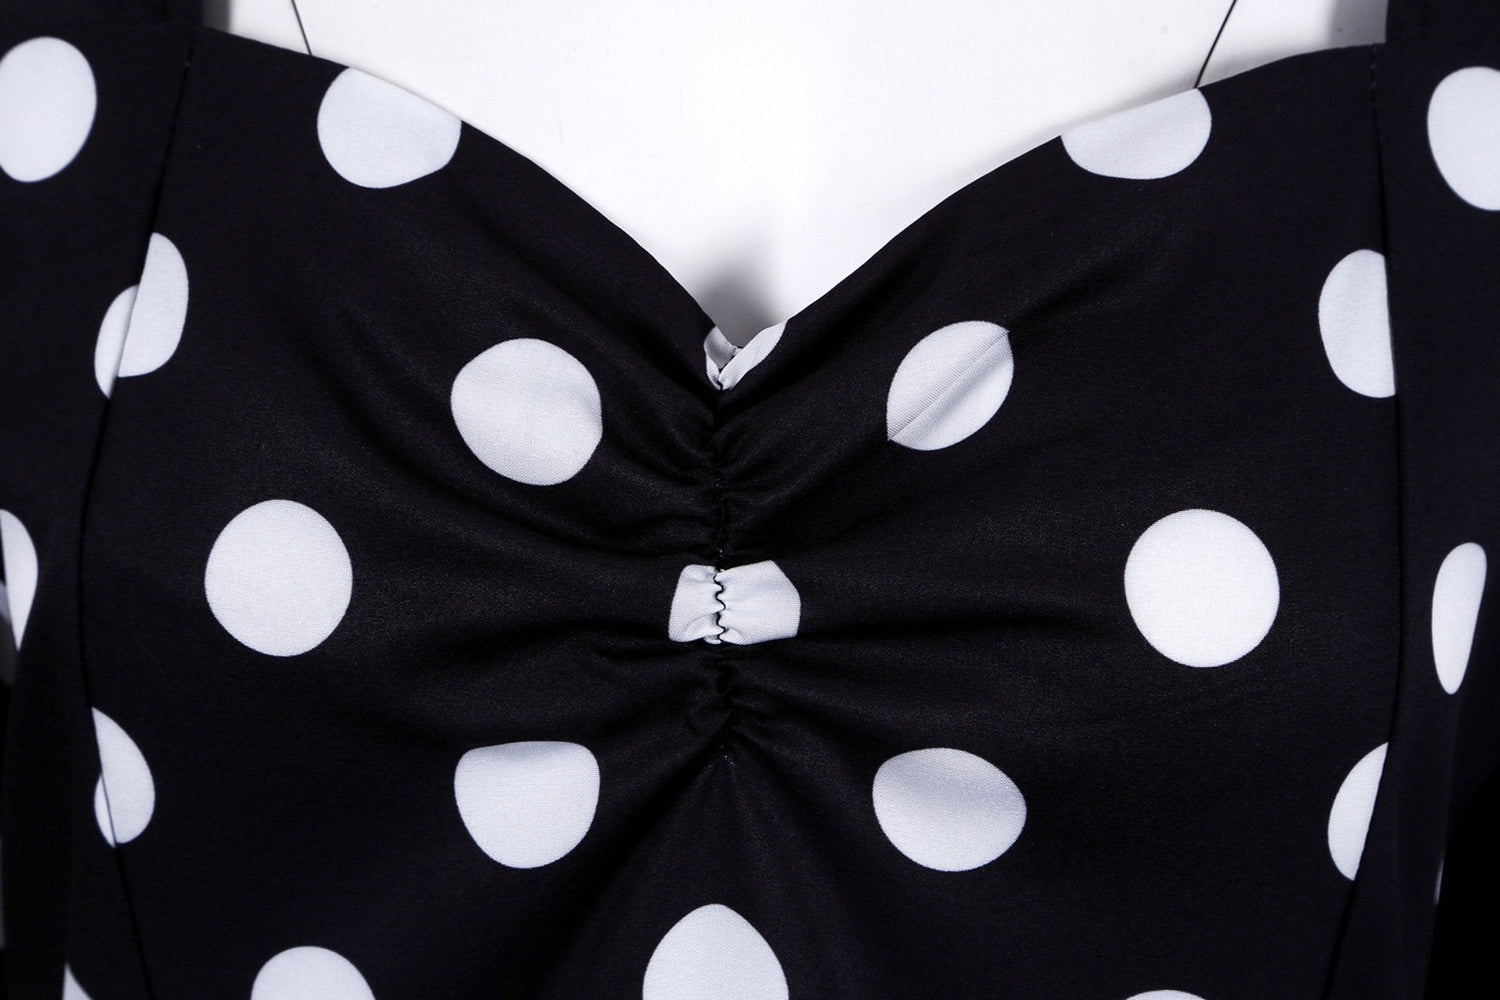 Retro Dot Print Short Sleeves Short Dresses-Vintage Dresses-JEWELRYSHEOWN